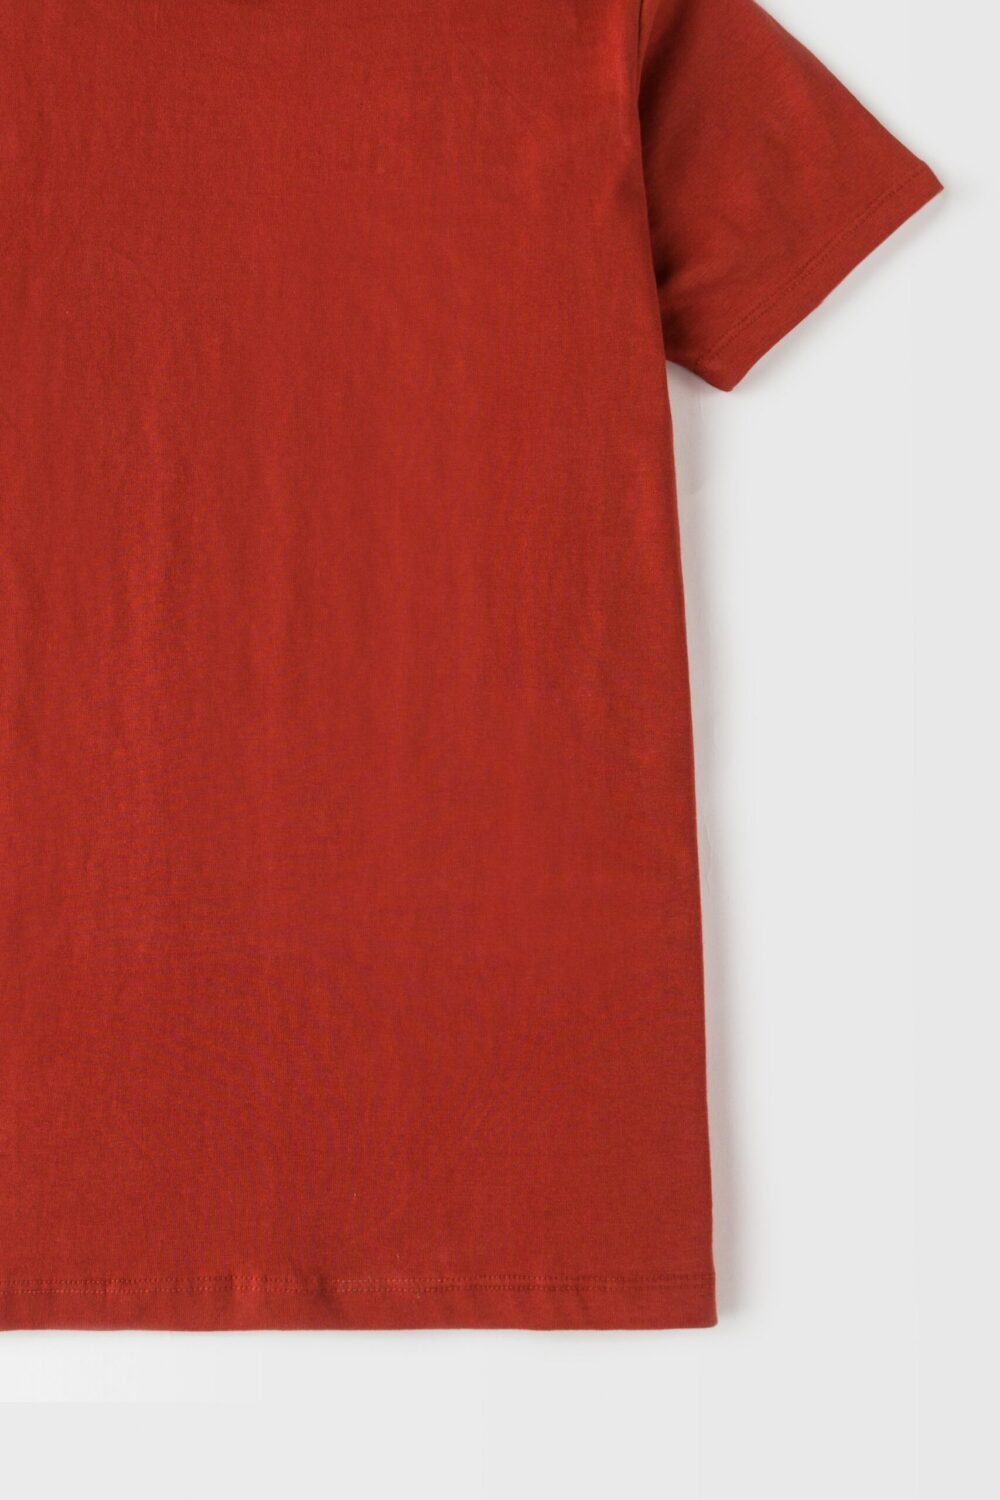 ZR Basic Cotton T Shirt – Burnt Orange